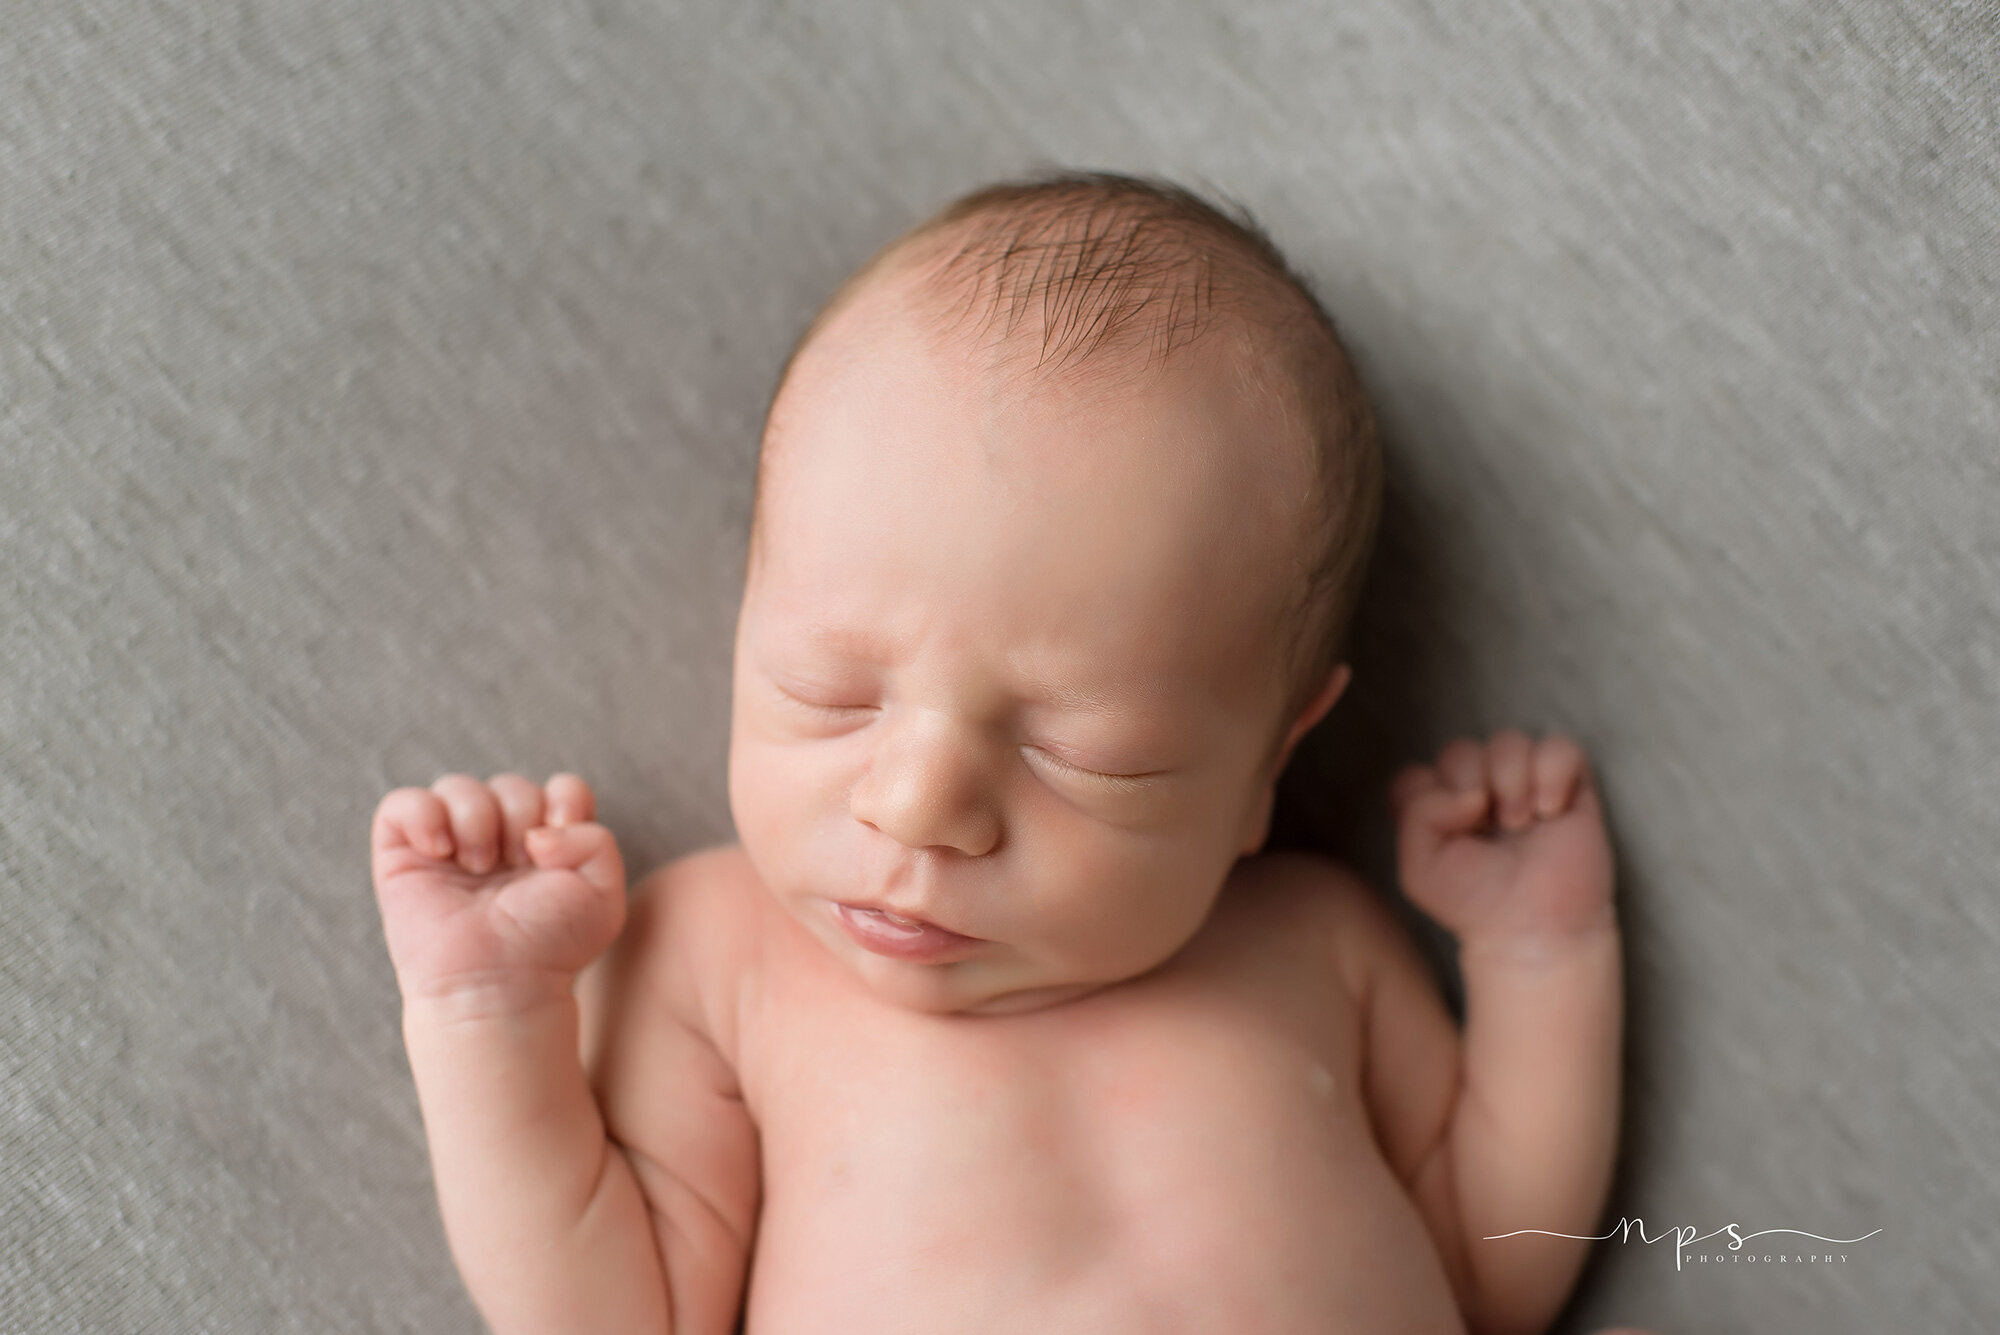 Newborn Baby Boy 001 - NPS Photography